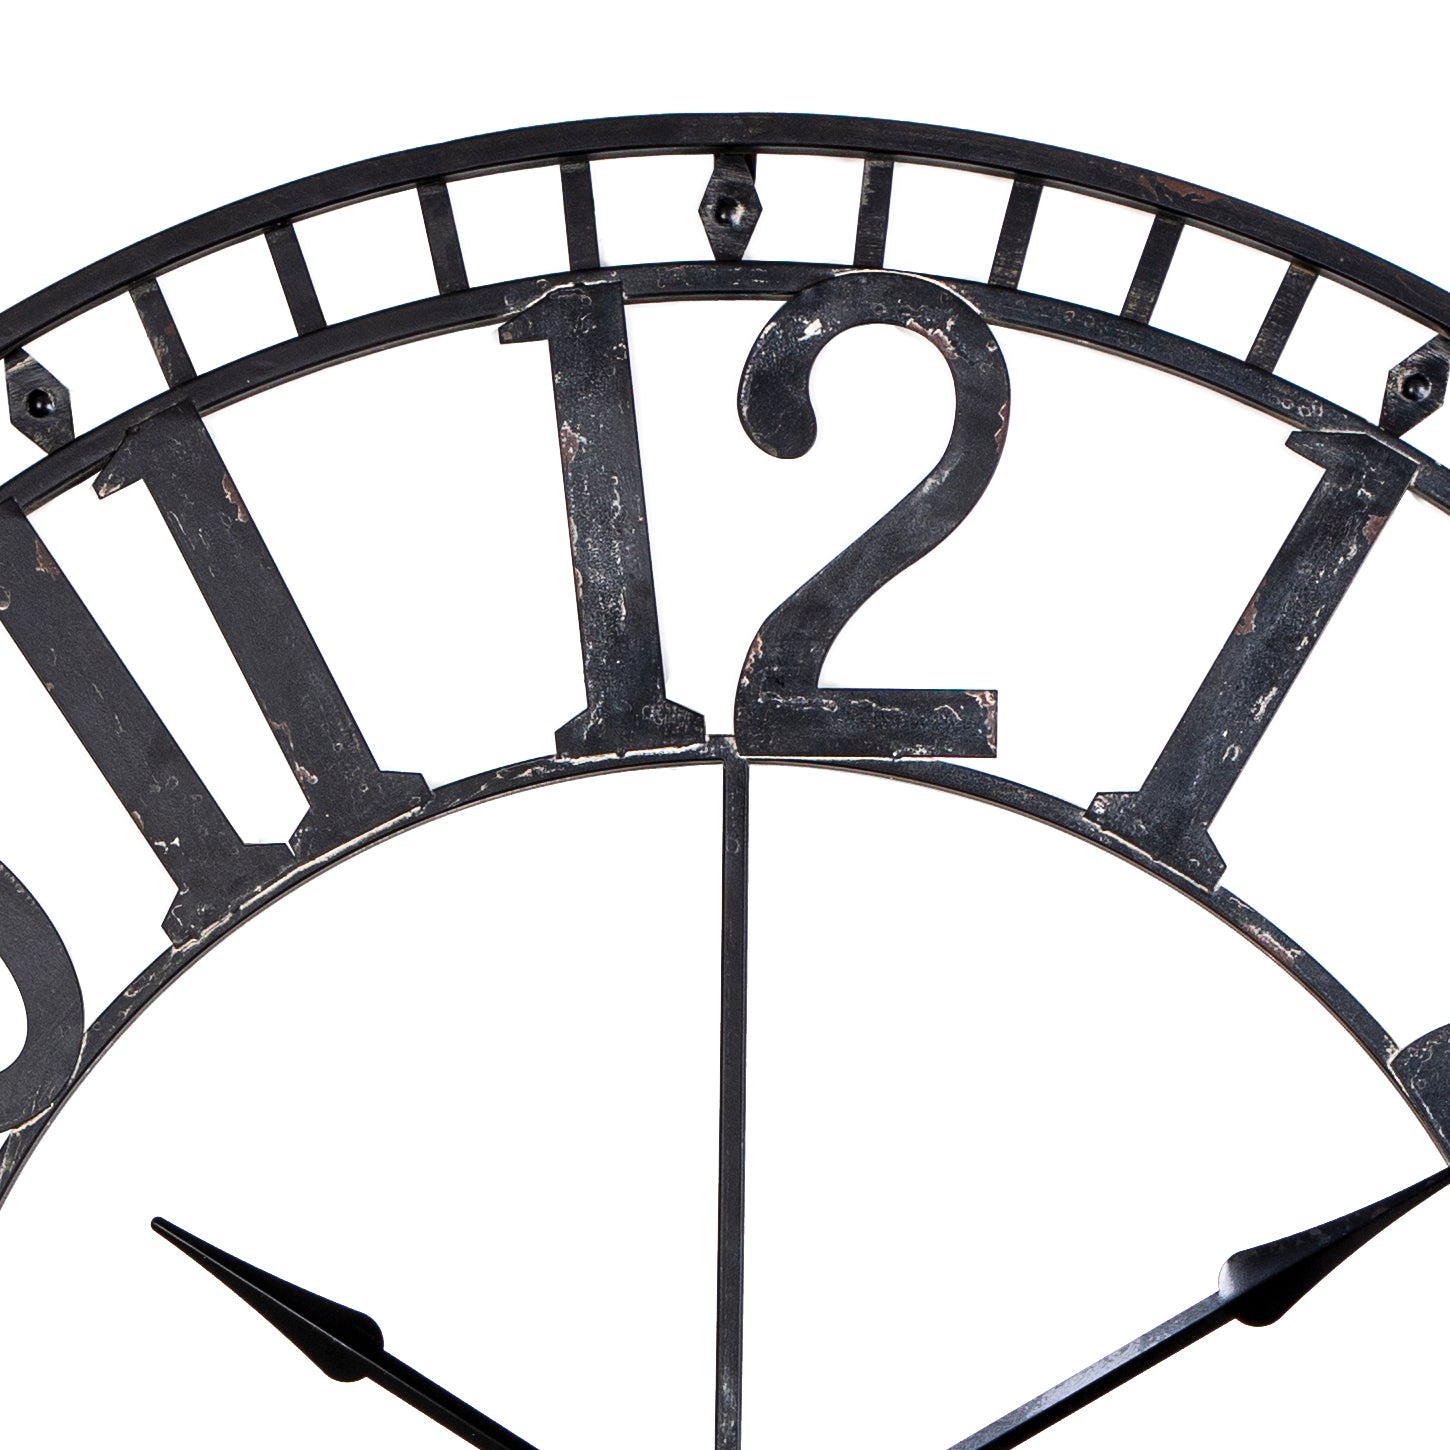 Loft97 CL56BK Manhattan Industrial Wall Clock, Analog, Black, 32